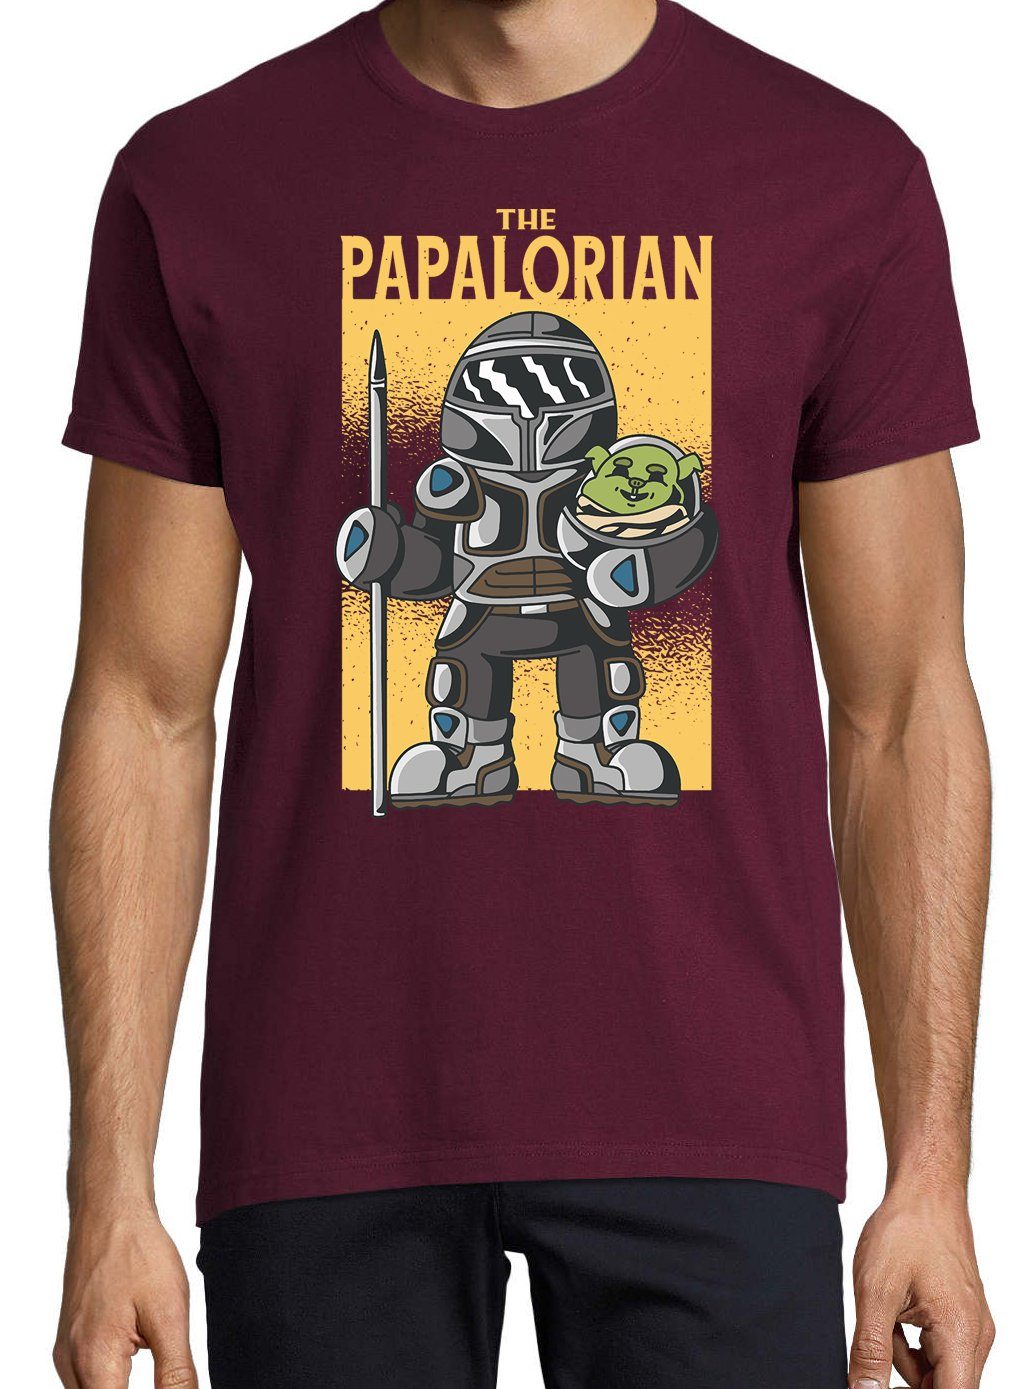 T-Shirt Designz Herren Frontprint Shirt mit Papalorian Burguns Youth trendigem